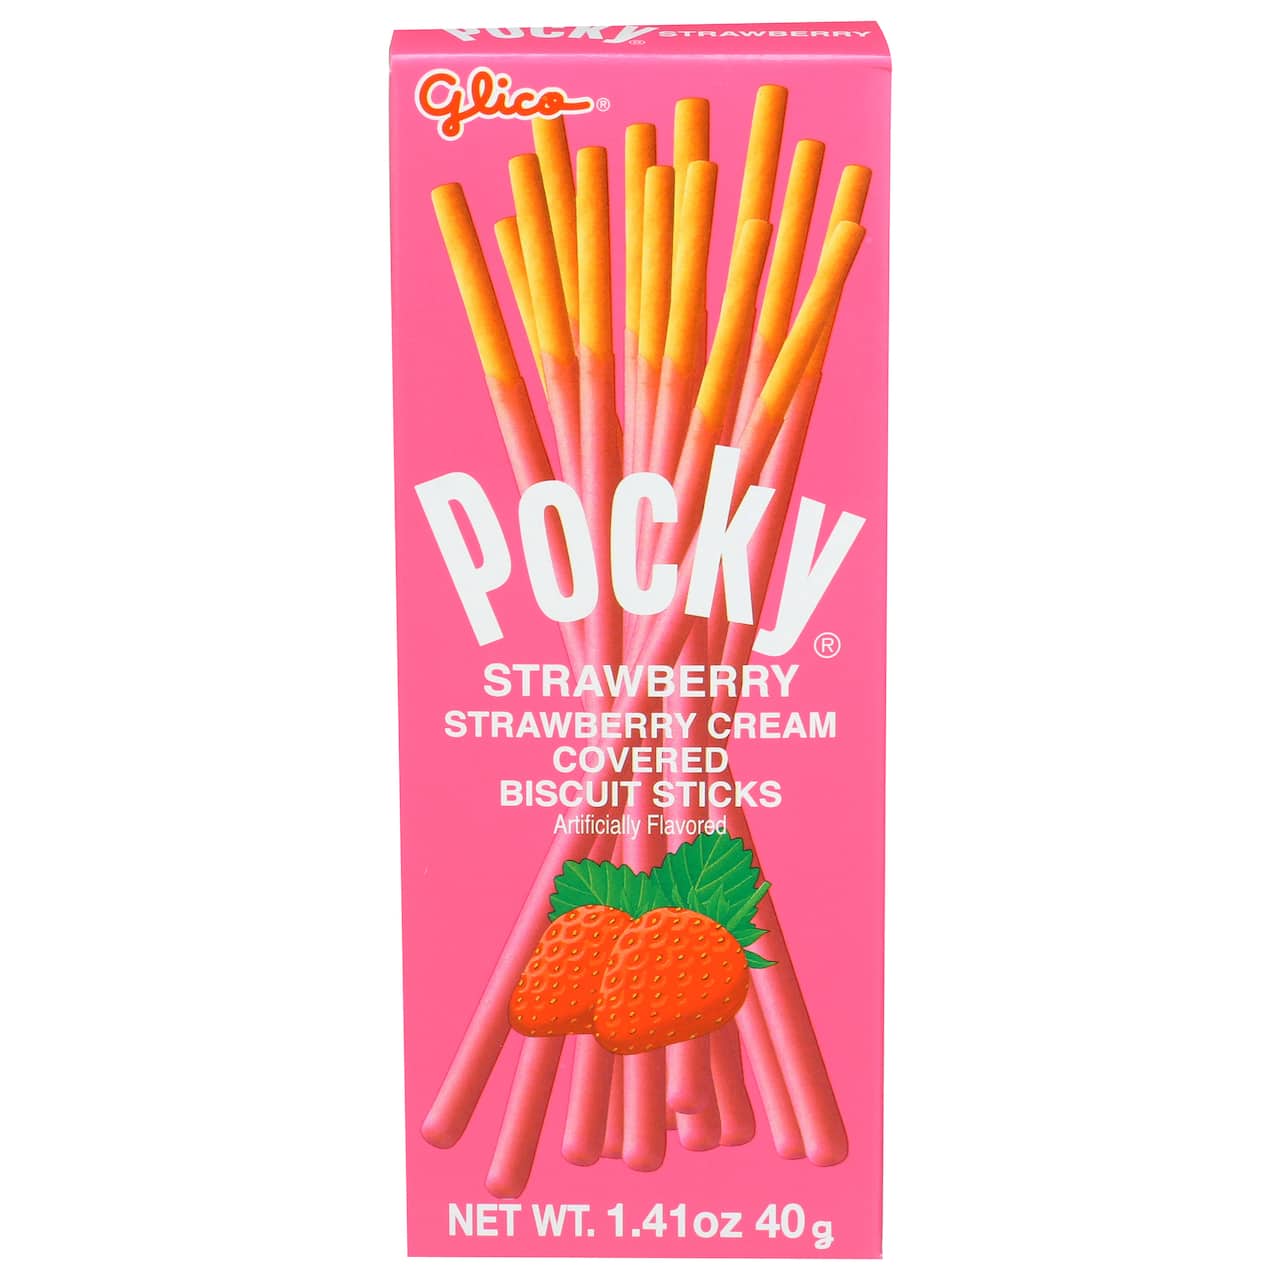 Glico Pocky Strawberry Cream Covered Biscuit Sticks